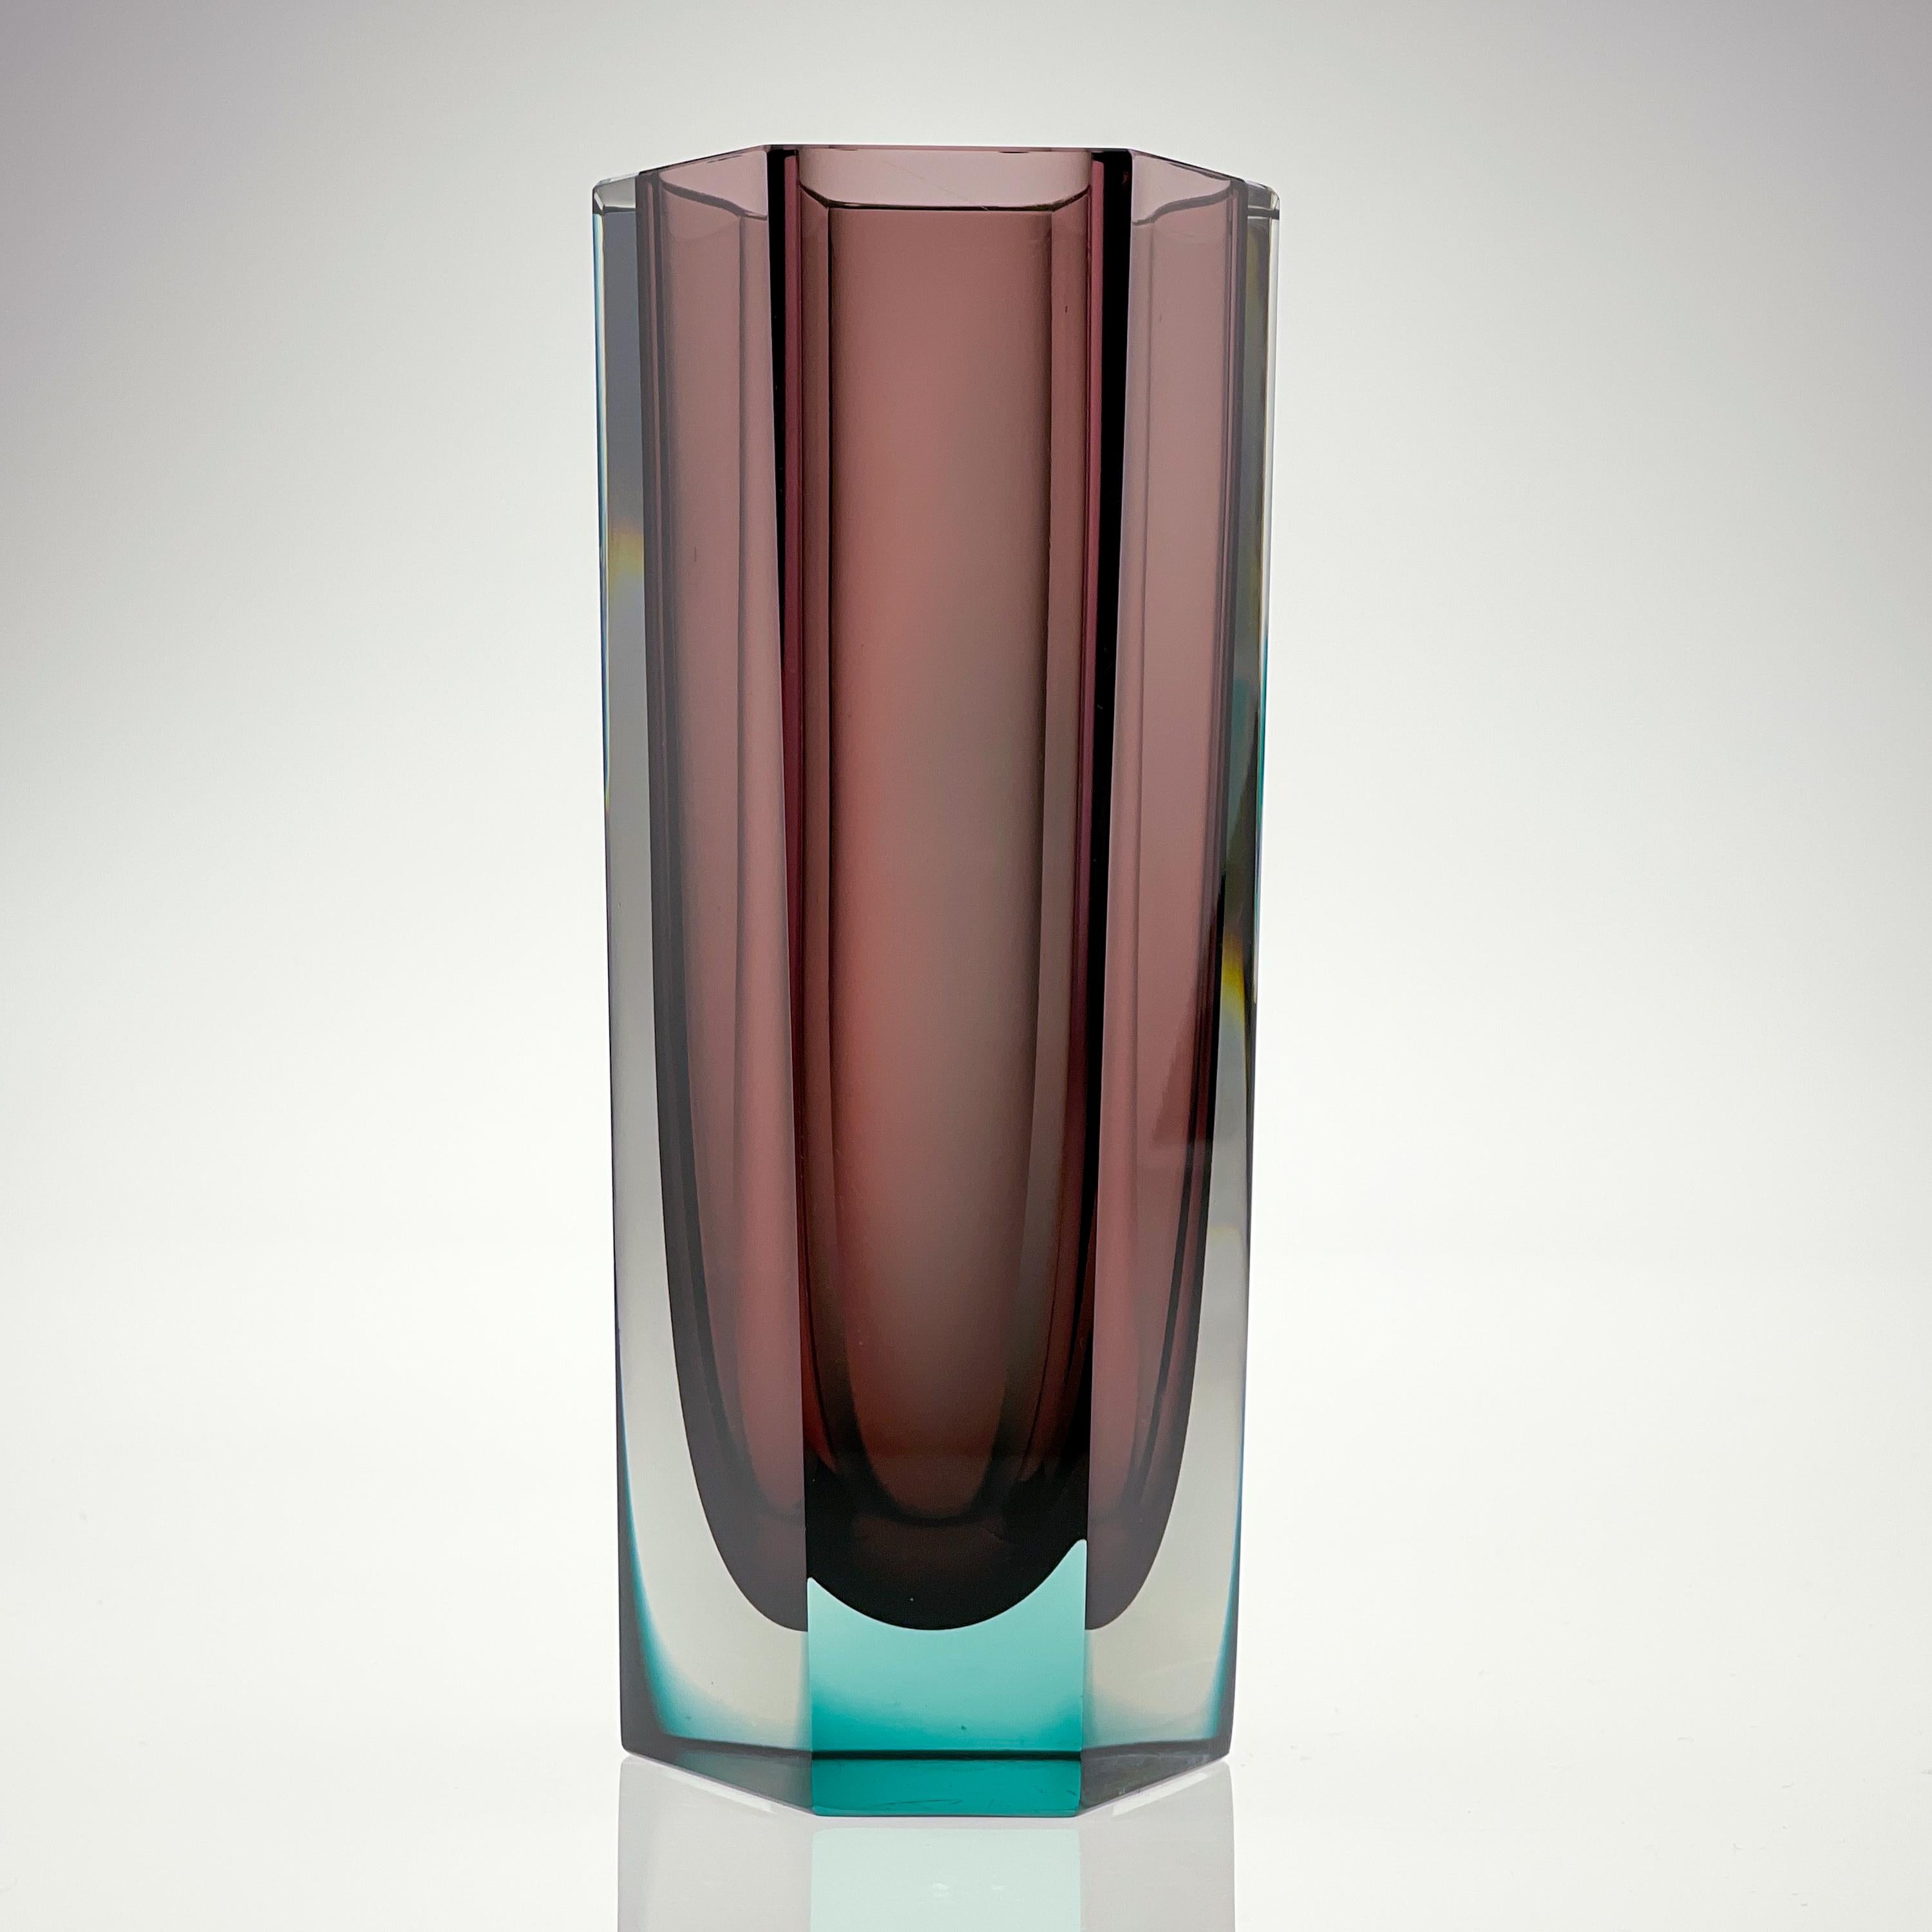 Finnish Kaj Franck - a Glass Art-Object 